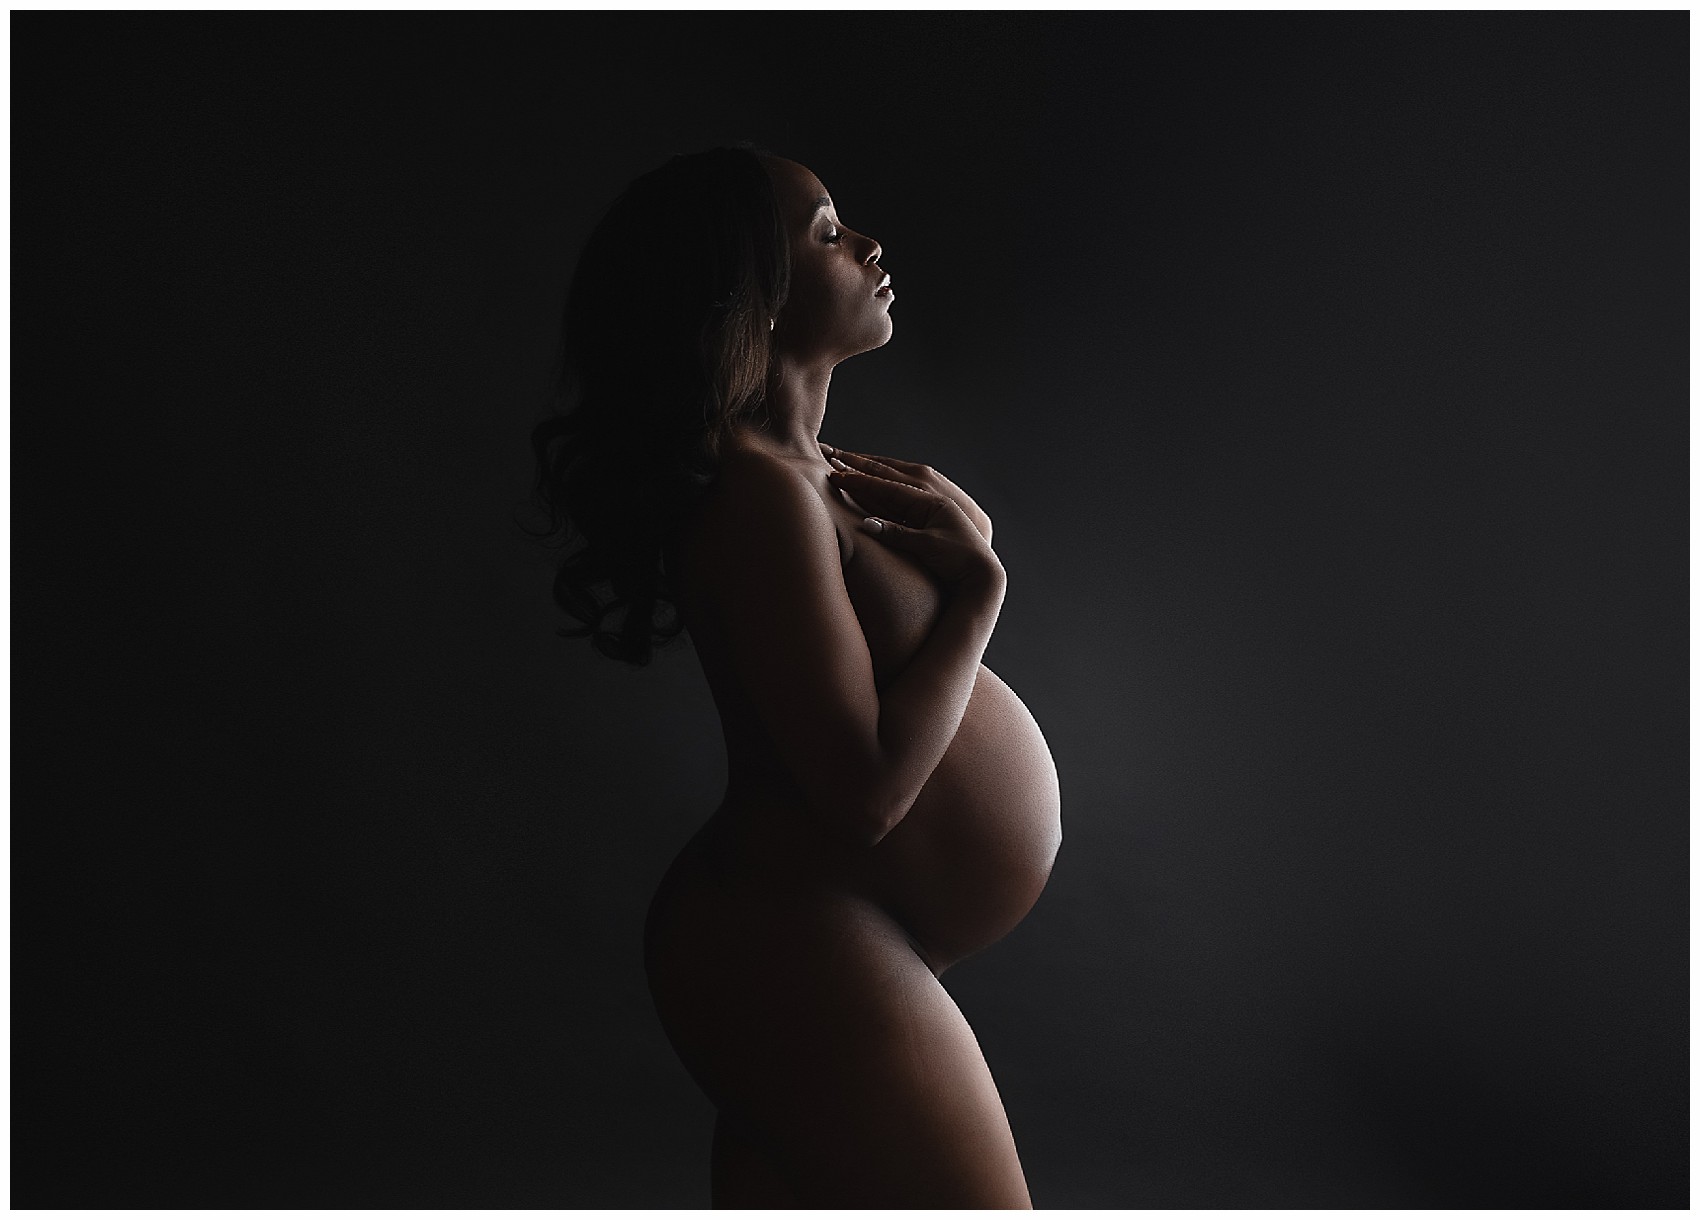 Chrisean maternity pics